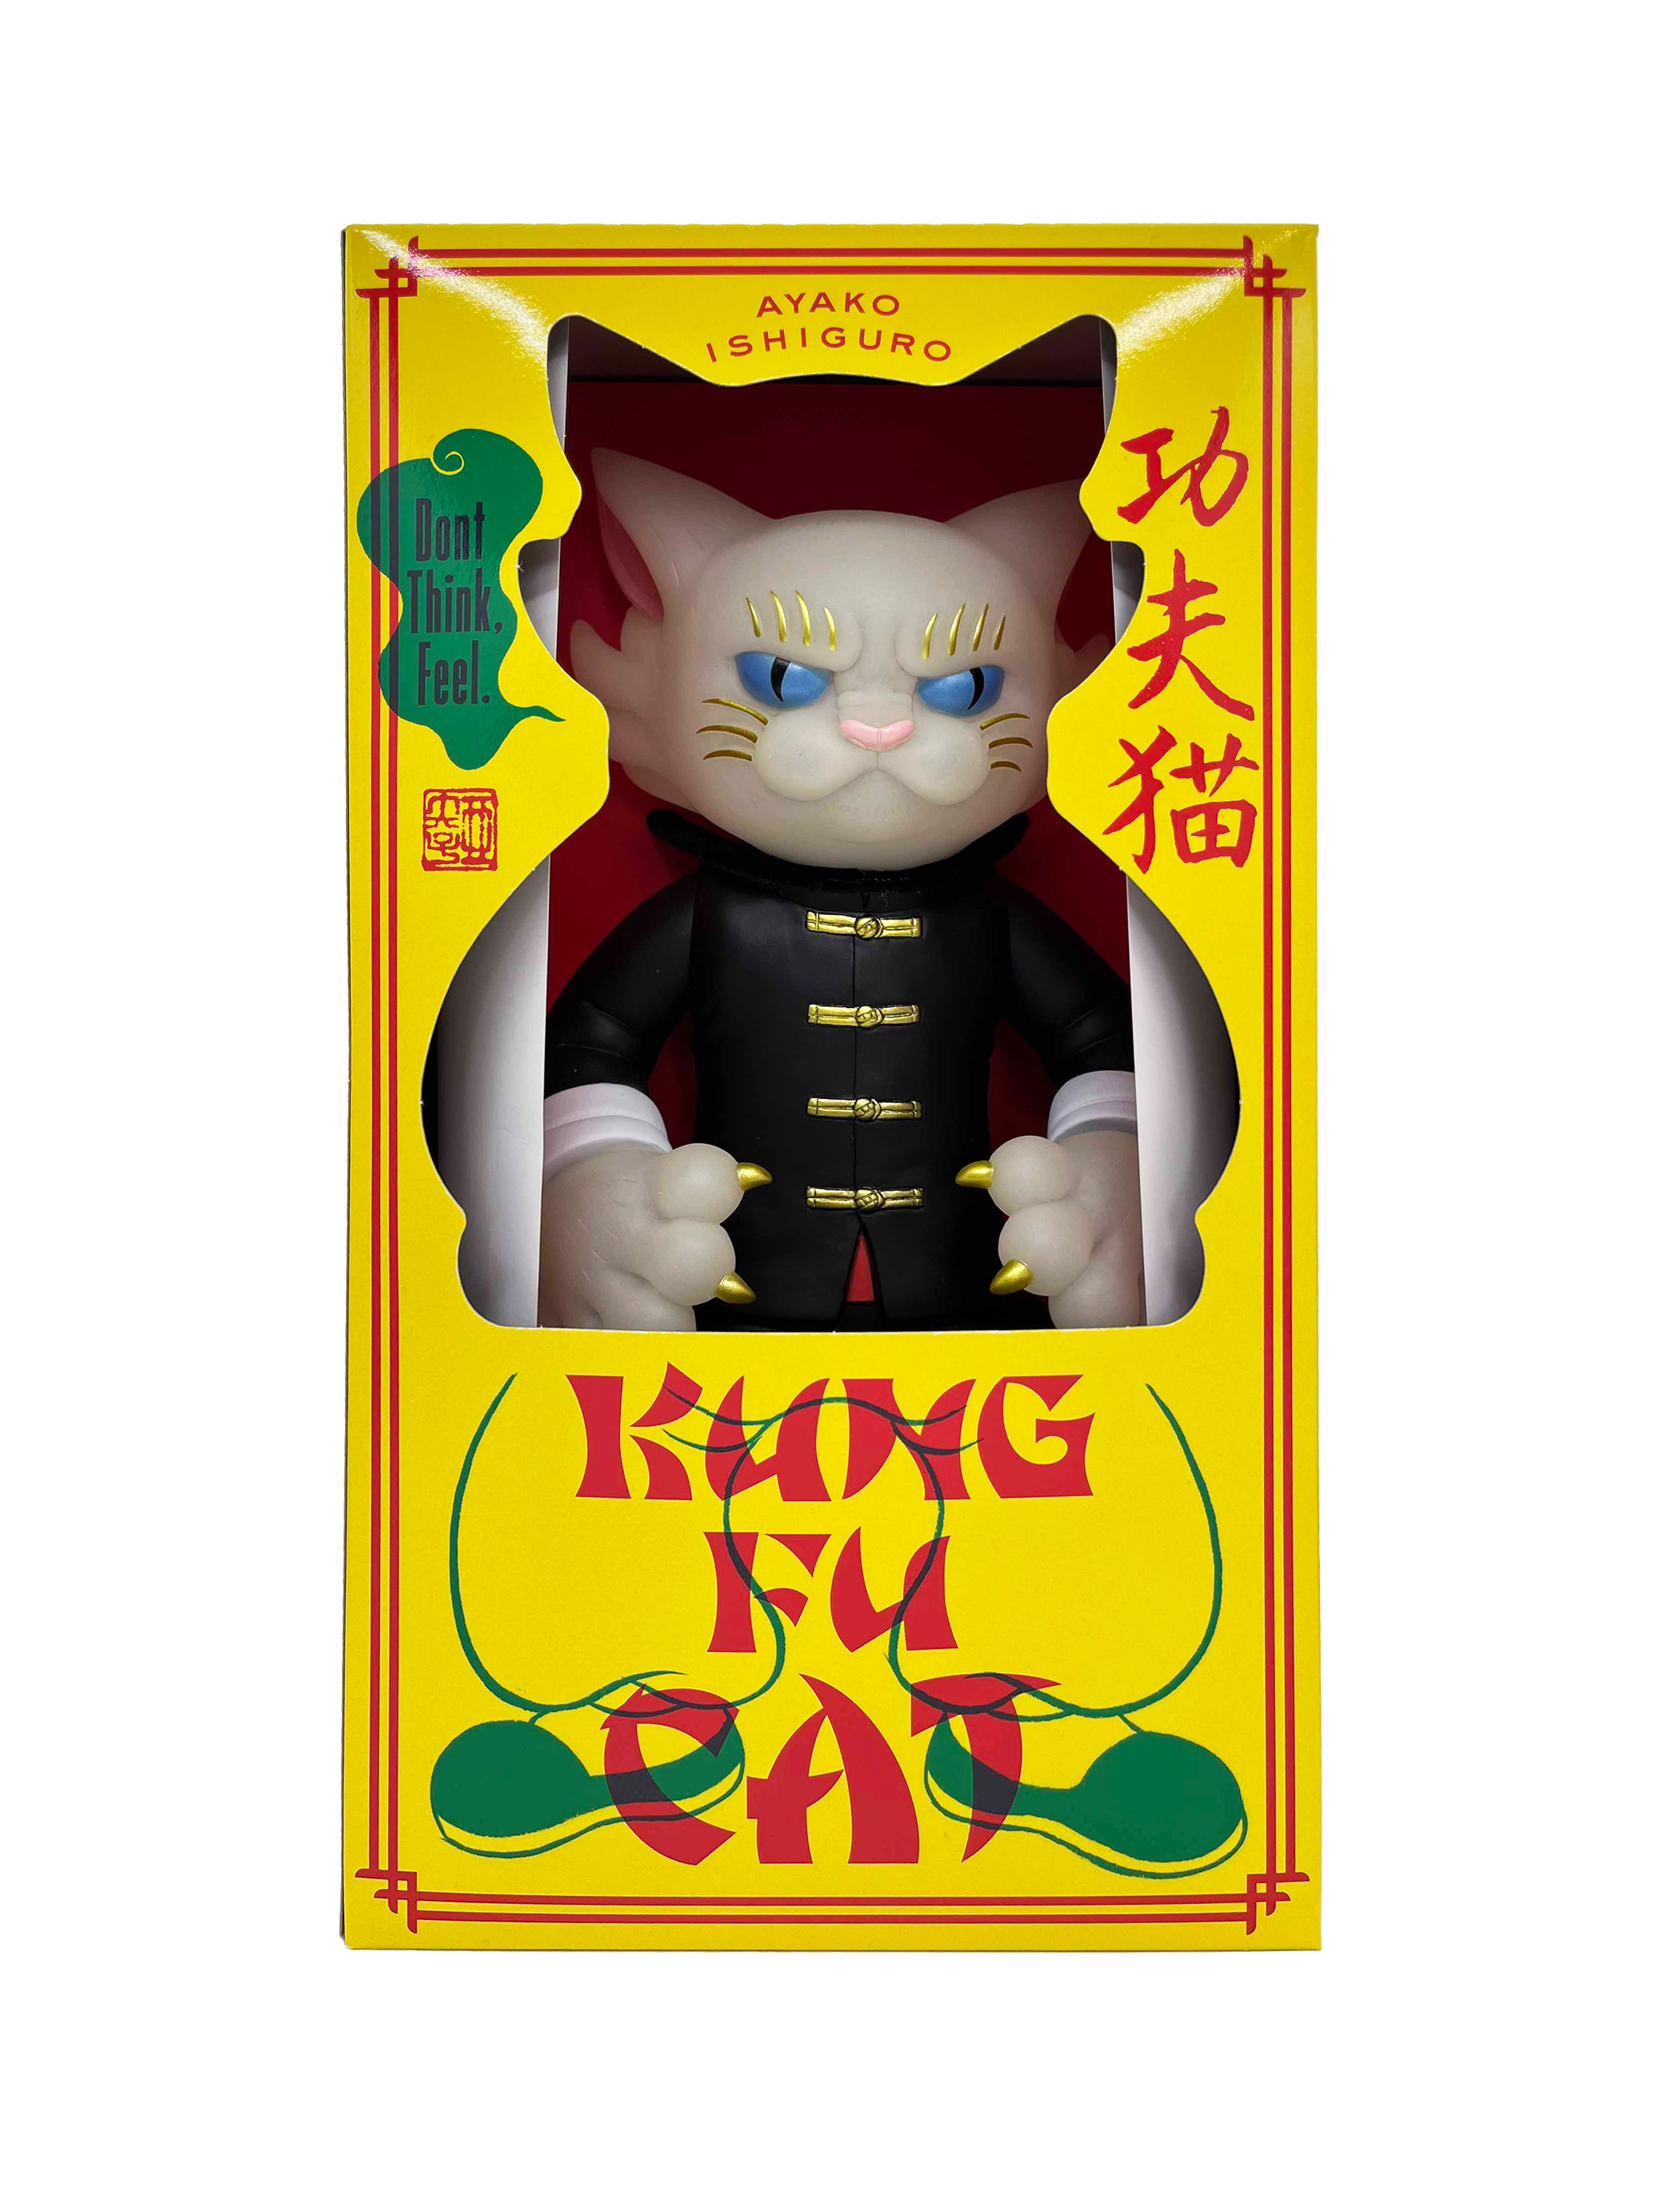 Soft Vinyl Figure Kung Fu Cat, Black Cat